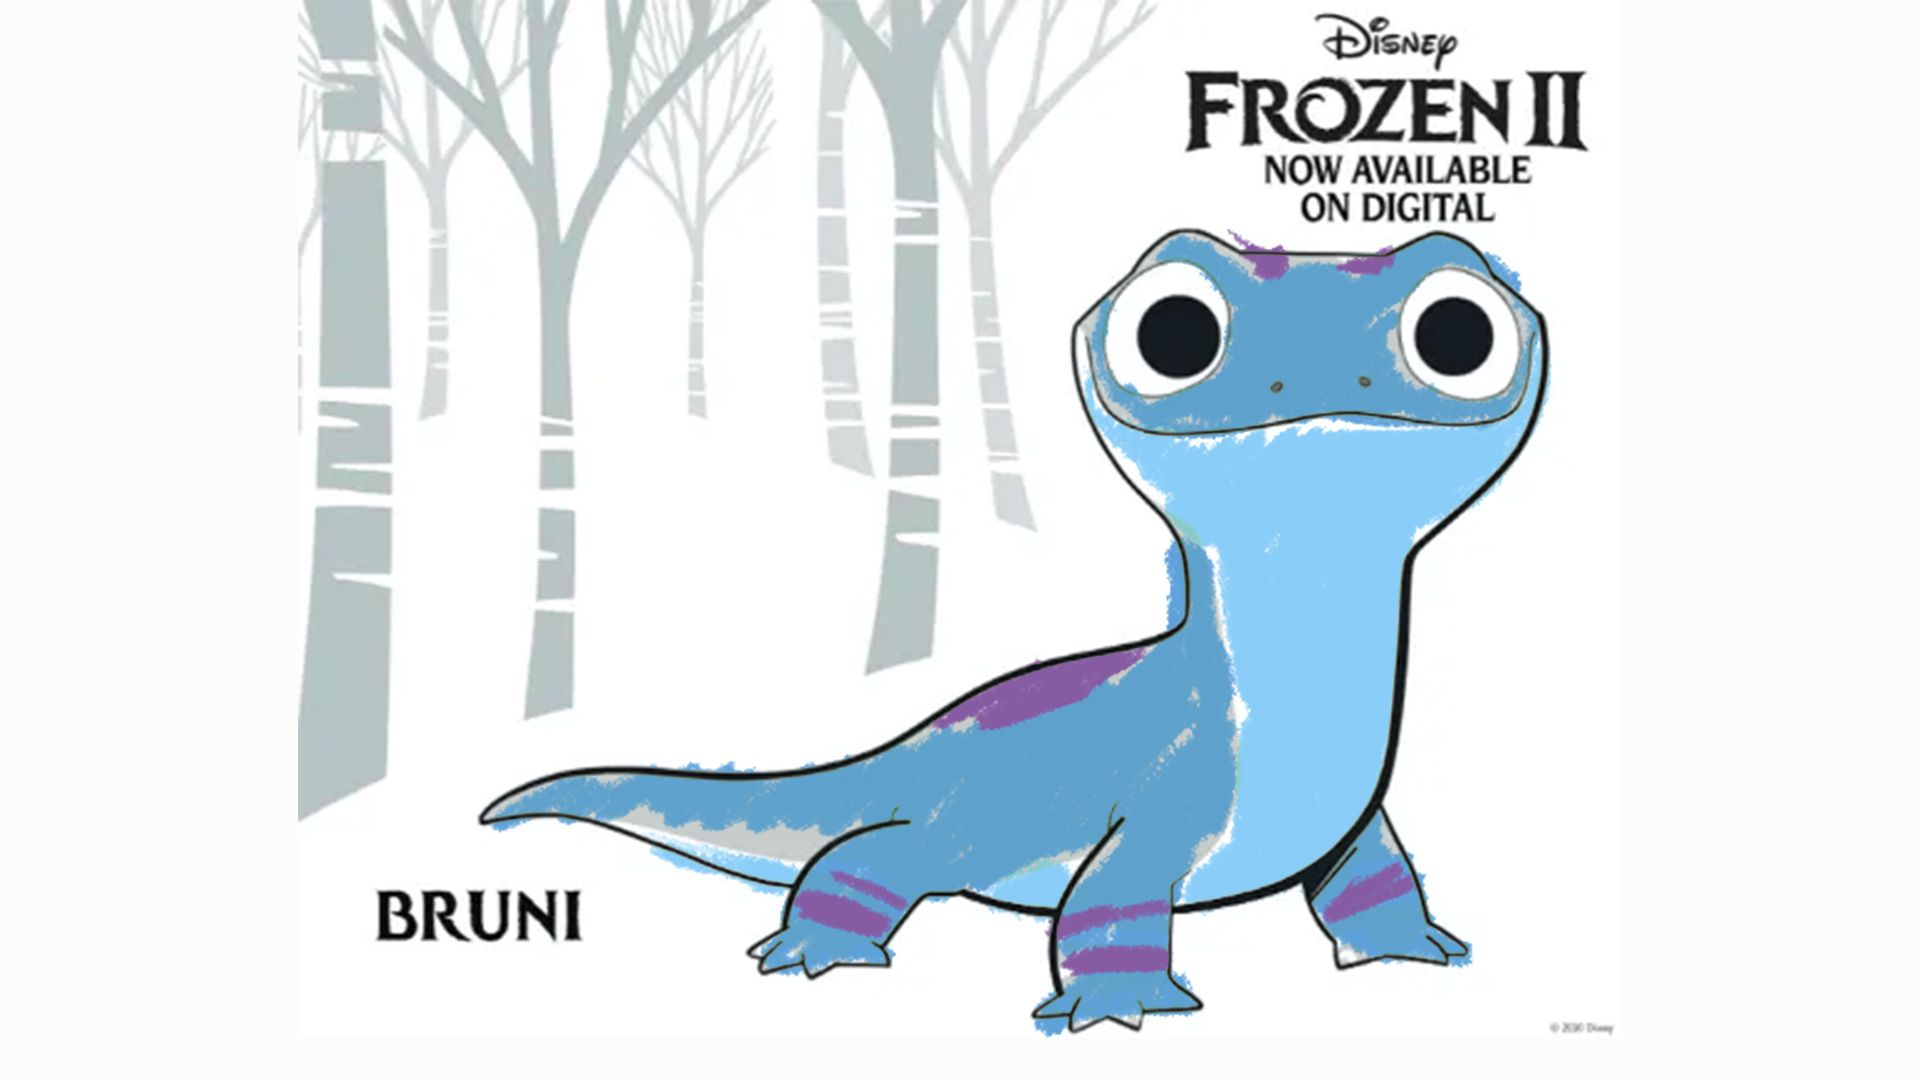 Printable Frozen 2 Plus Other Frozen Activities at Home!